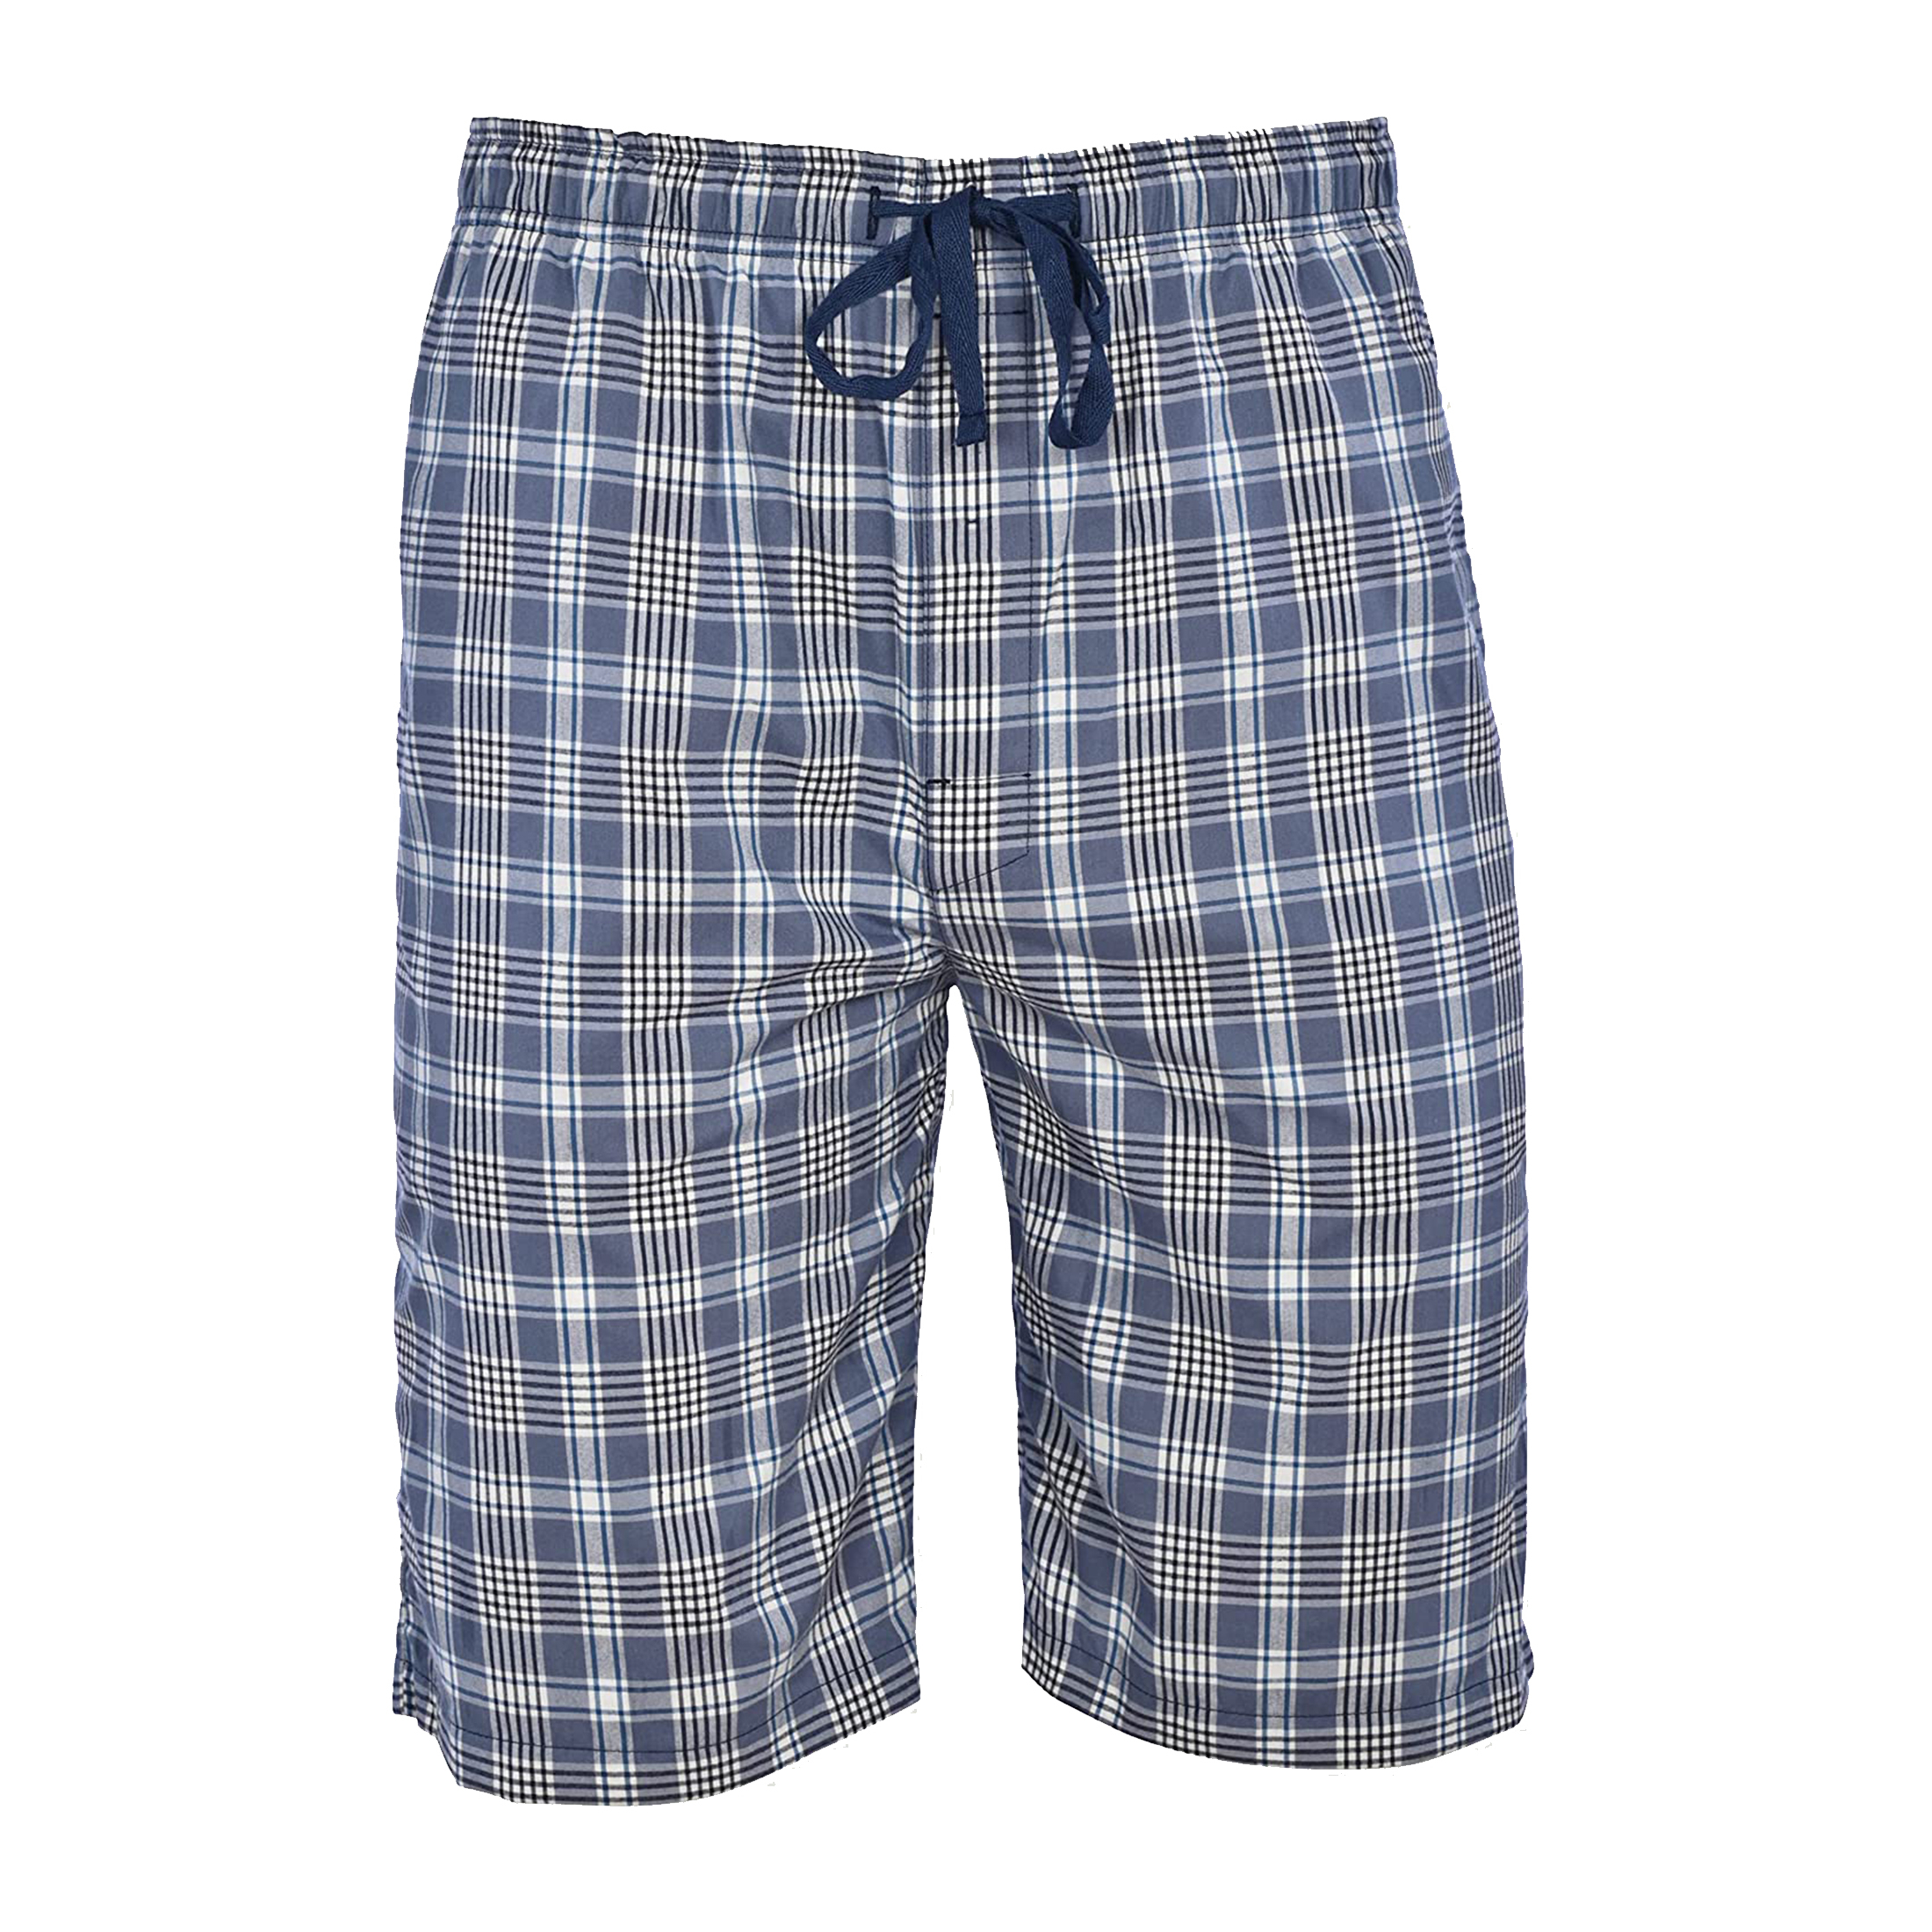 Multi-Pack: Men's Ultra-Soft Jersey Knit Sleep Lounge Pajama Shorts For Sleepwear - Solid, 1 Pack, Medium